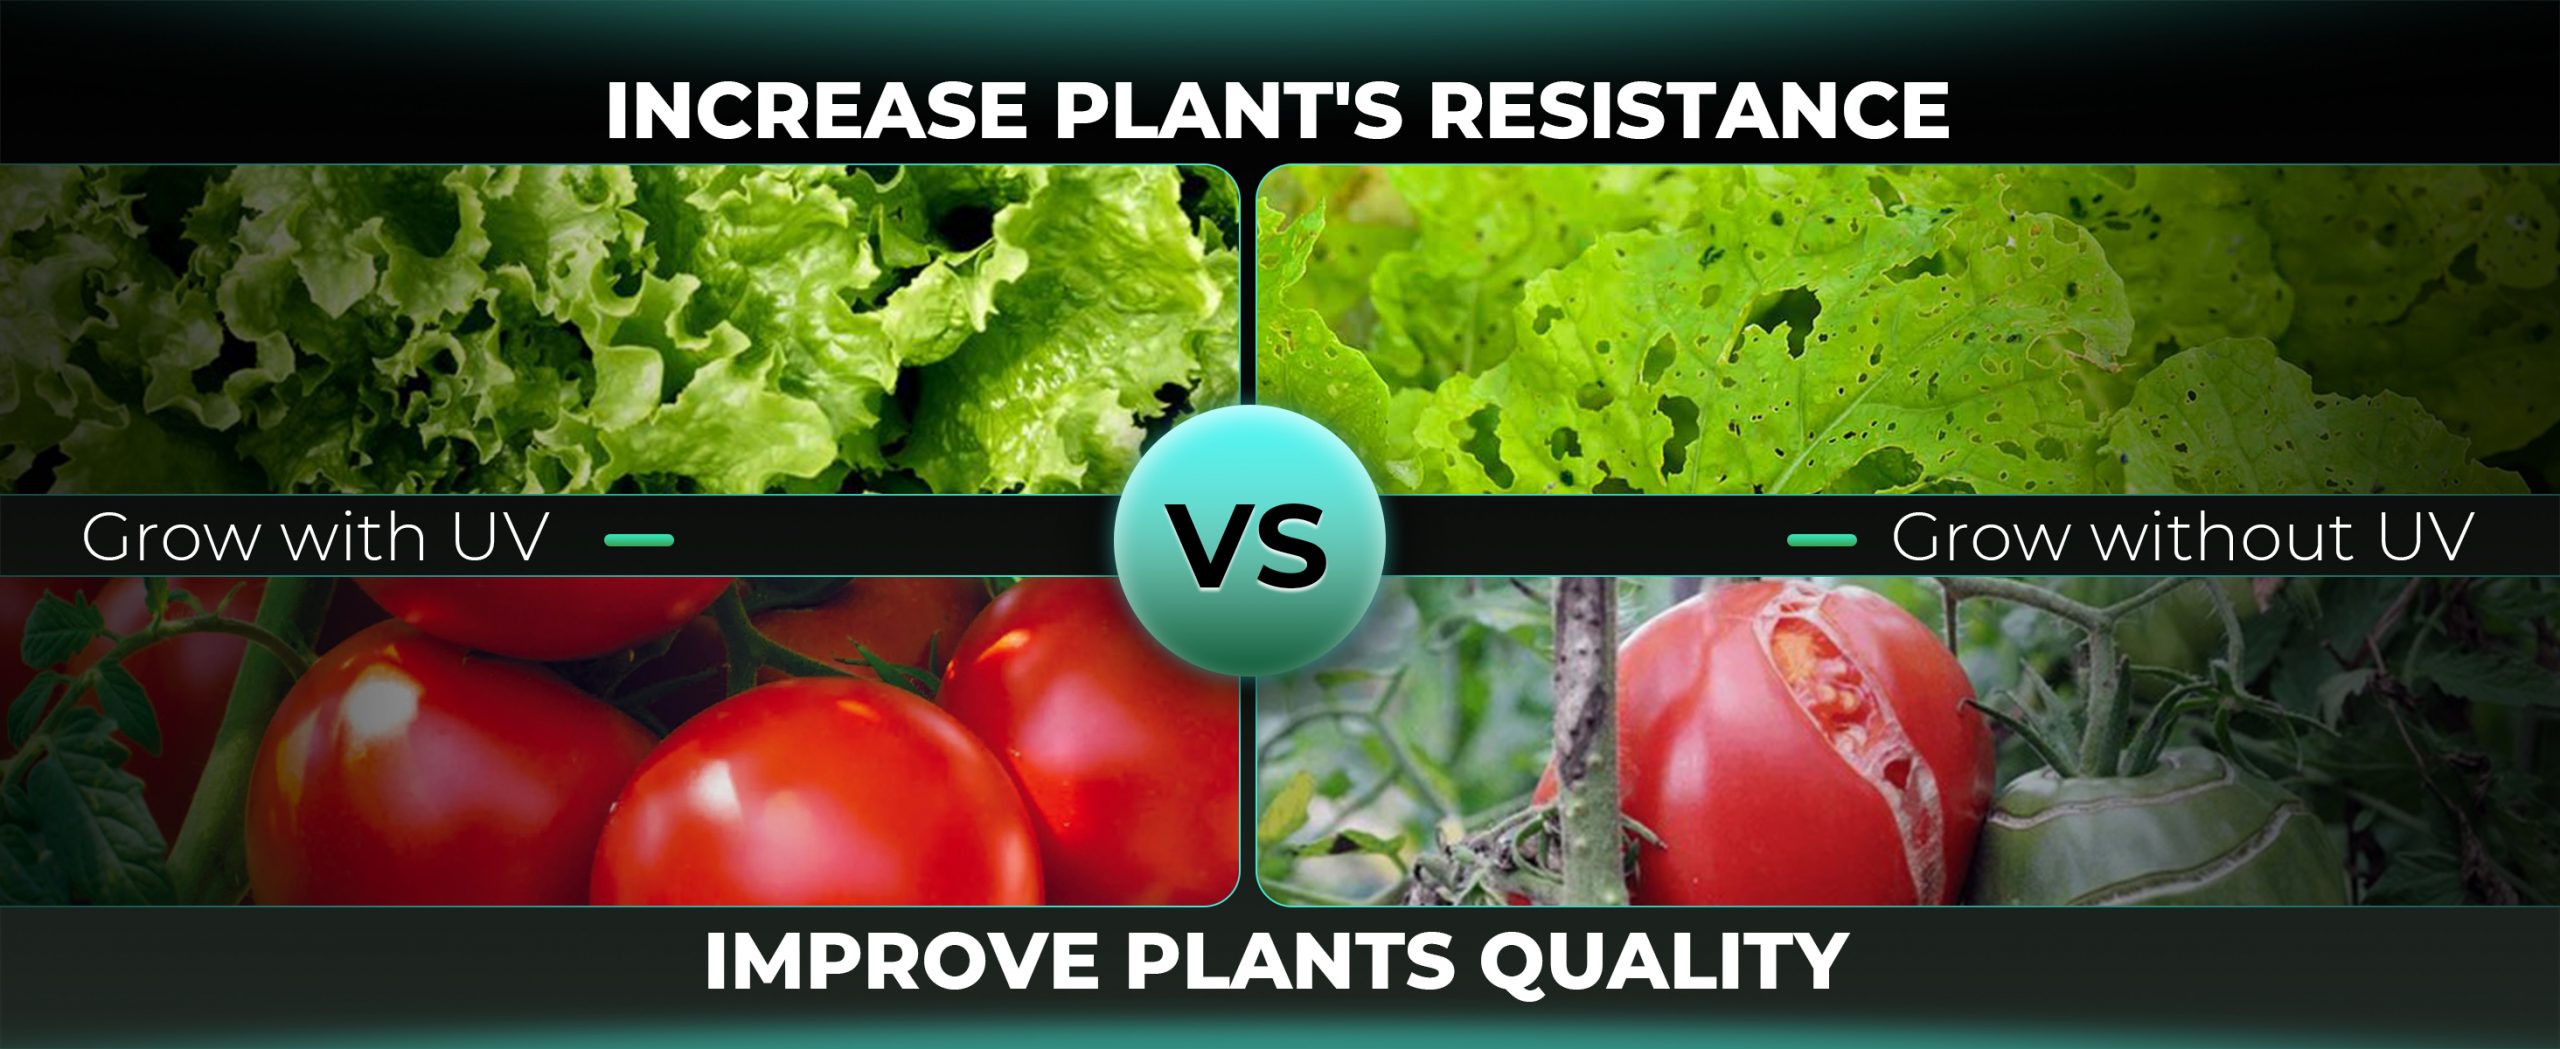 increase plants resistance with adlite uv supplemental light